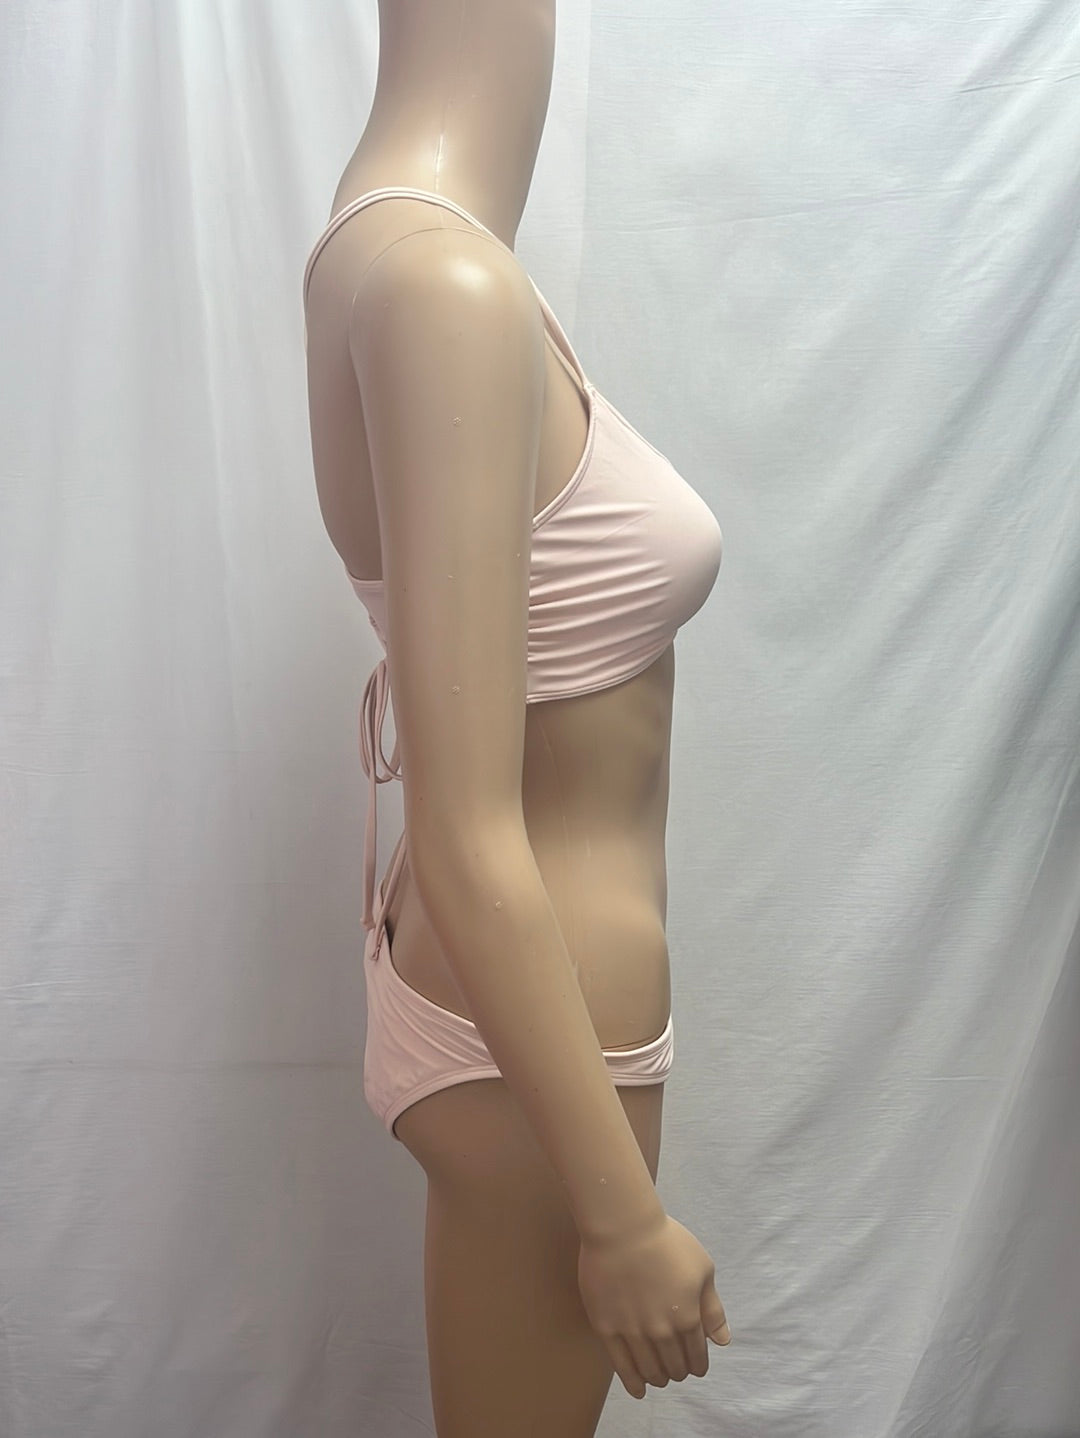 NWT -- AERIE Light Pink Two-Piece Bikini Bathing Suit -- US L